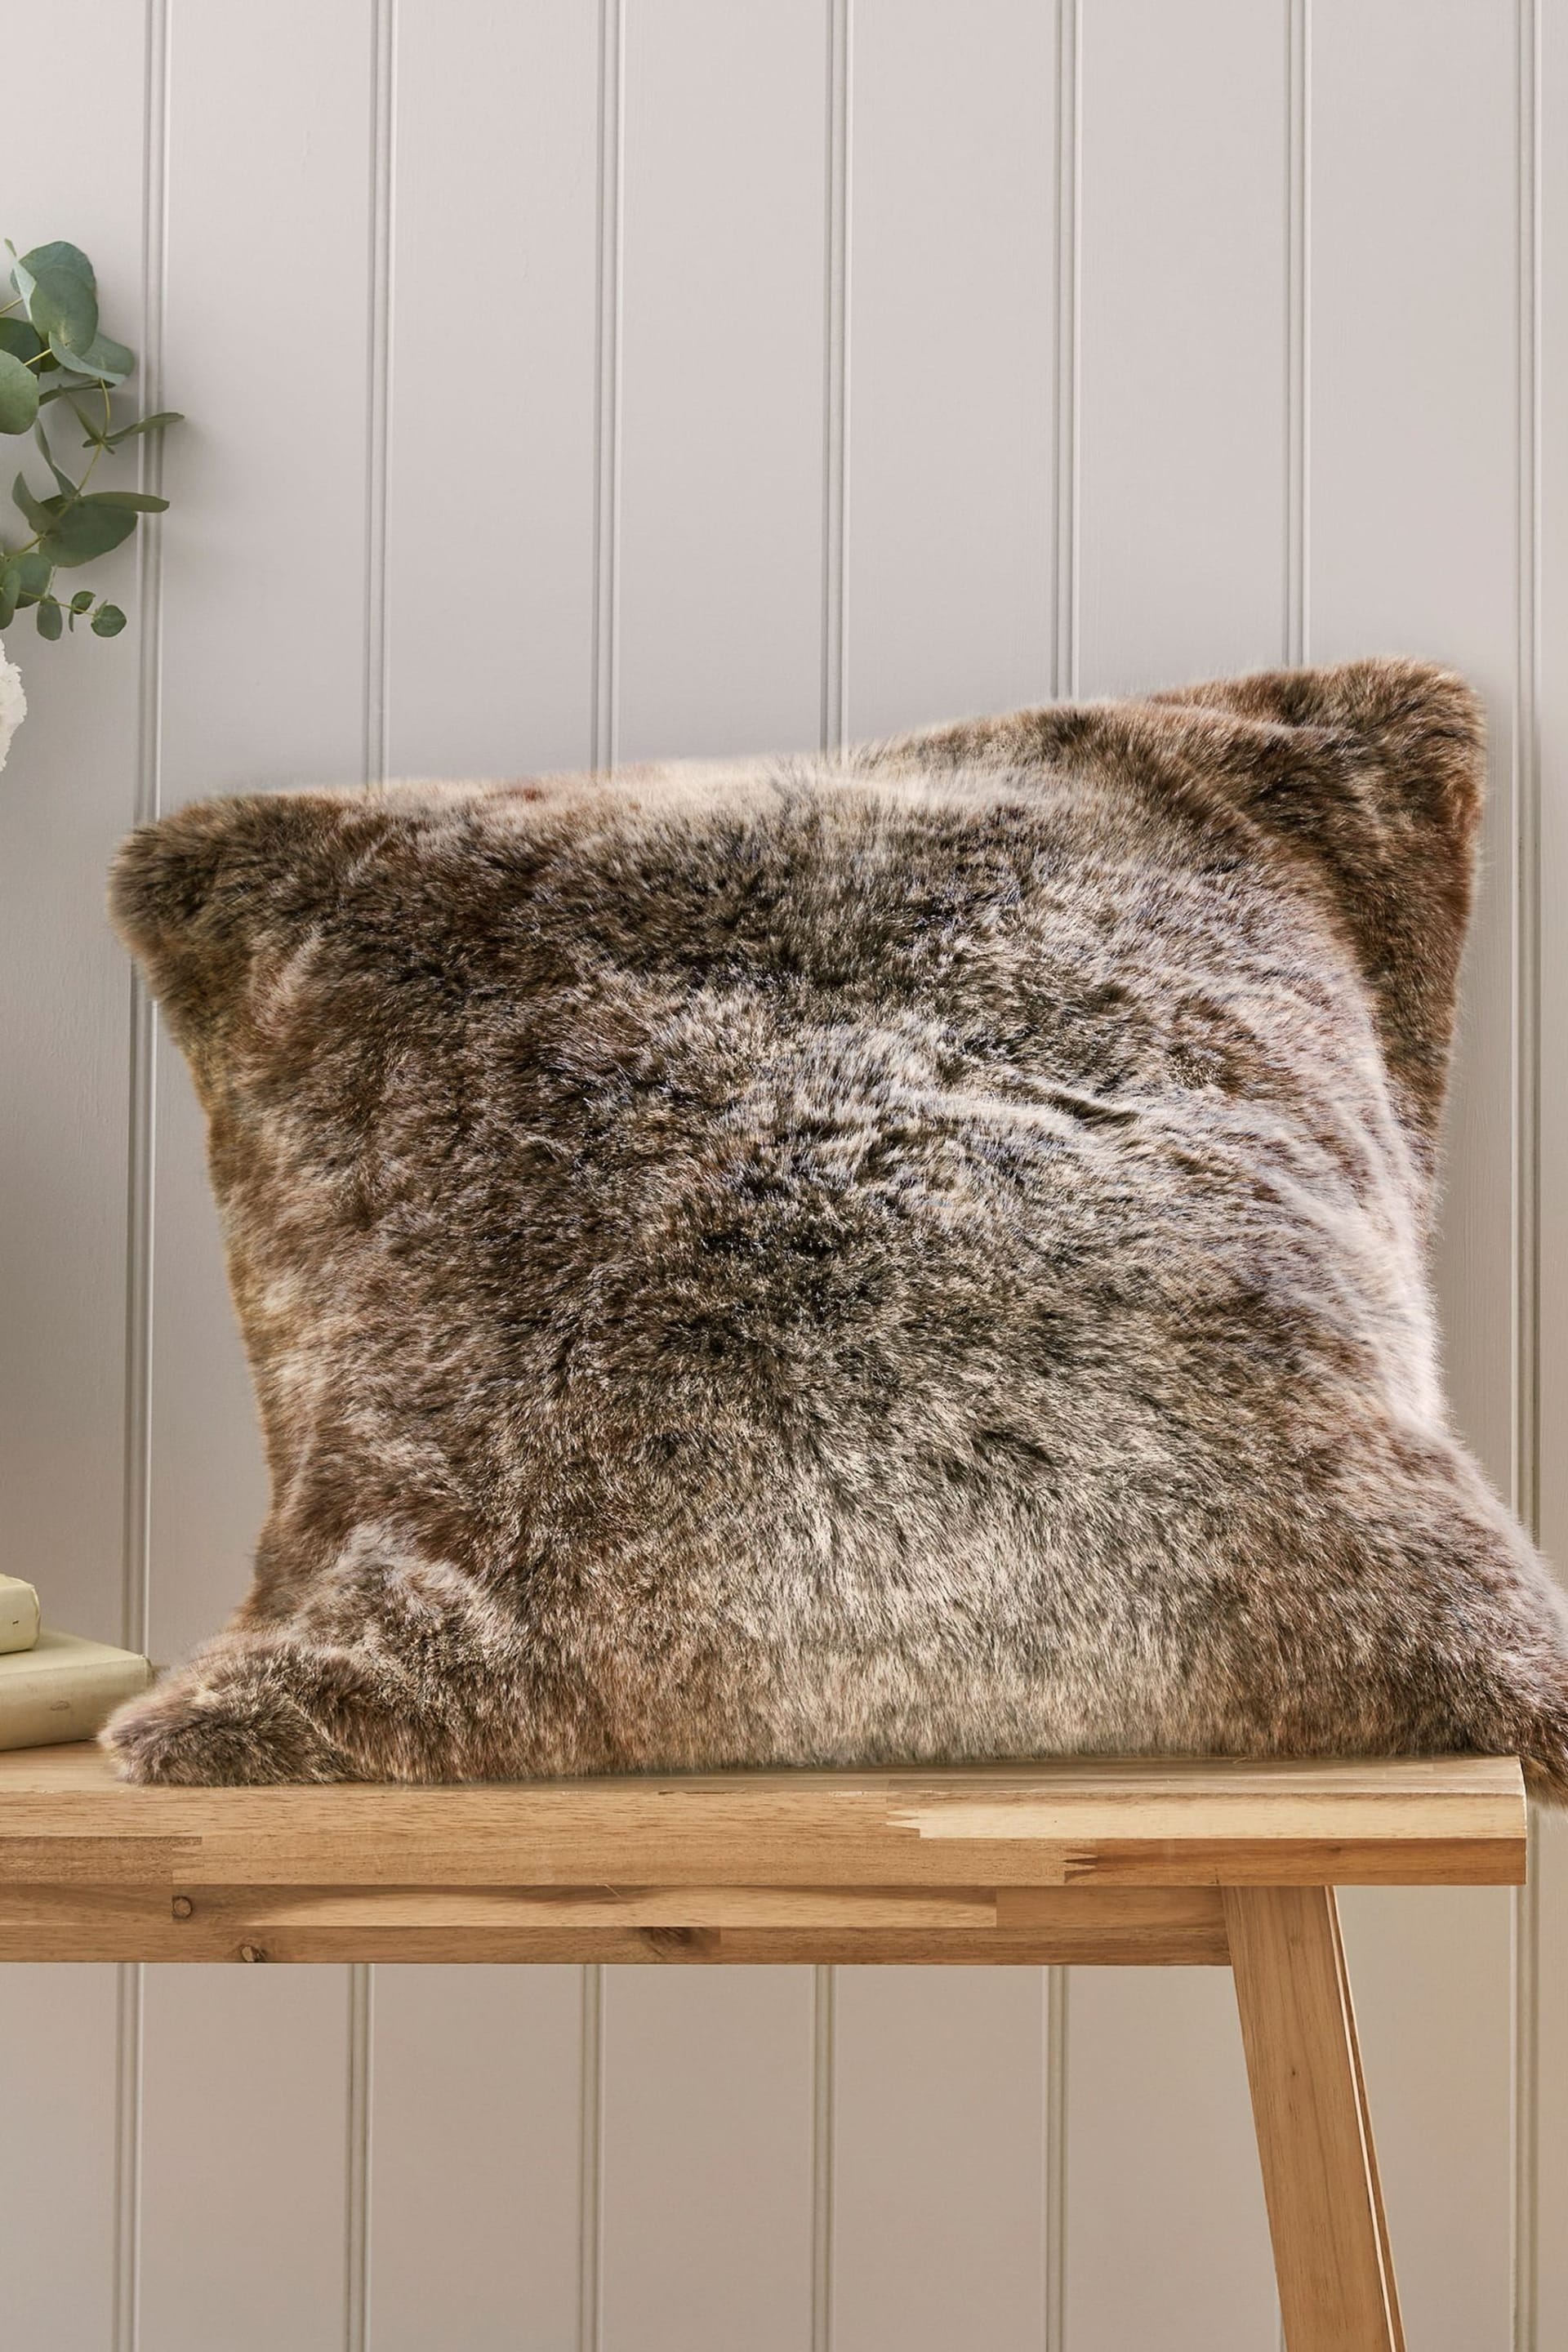 Laura Ashley Chocolate Brown Hexham Faux Fur Cushion - Image 2 of 3